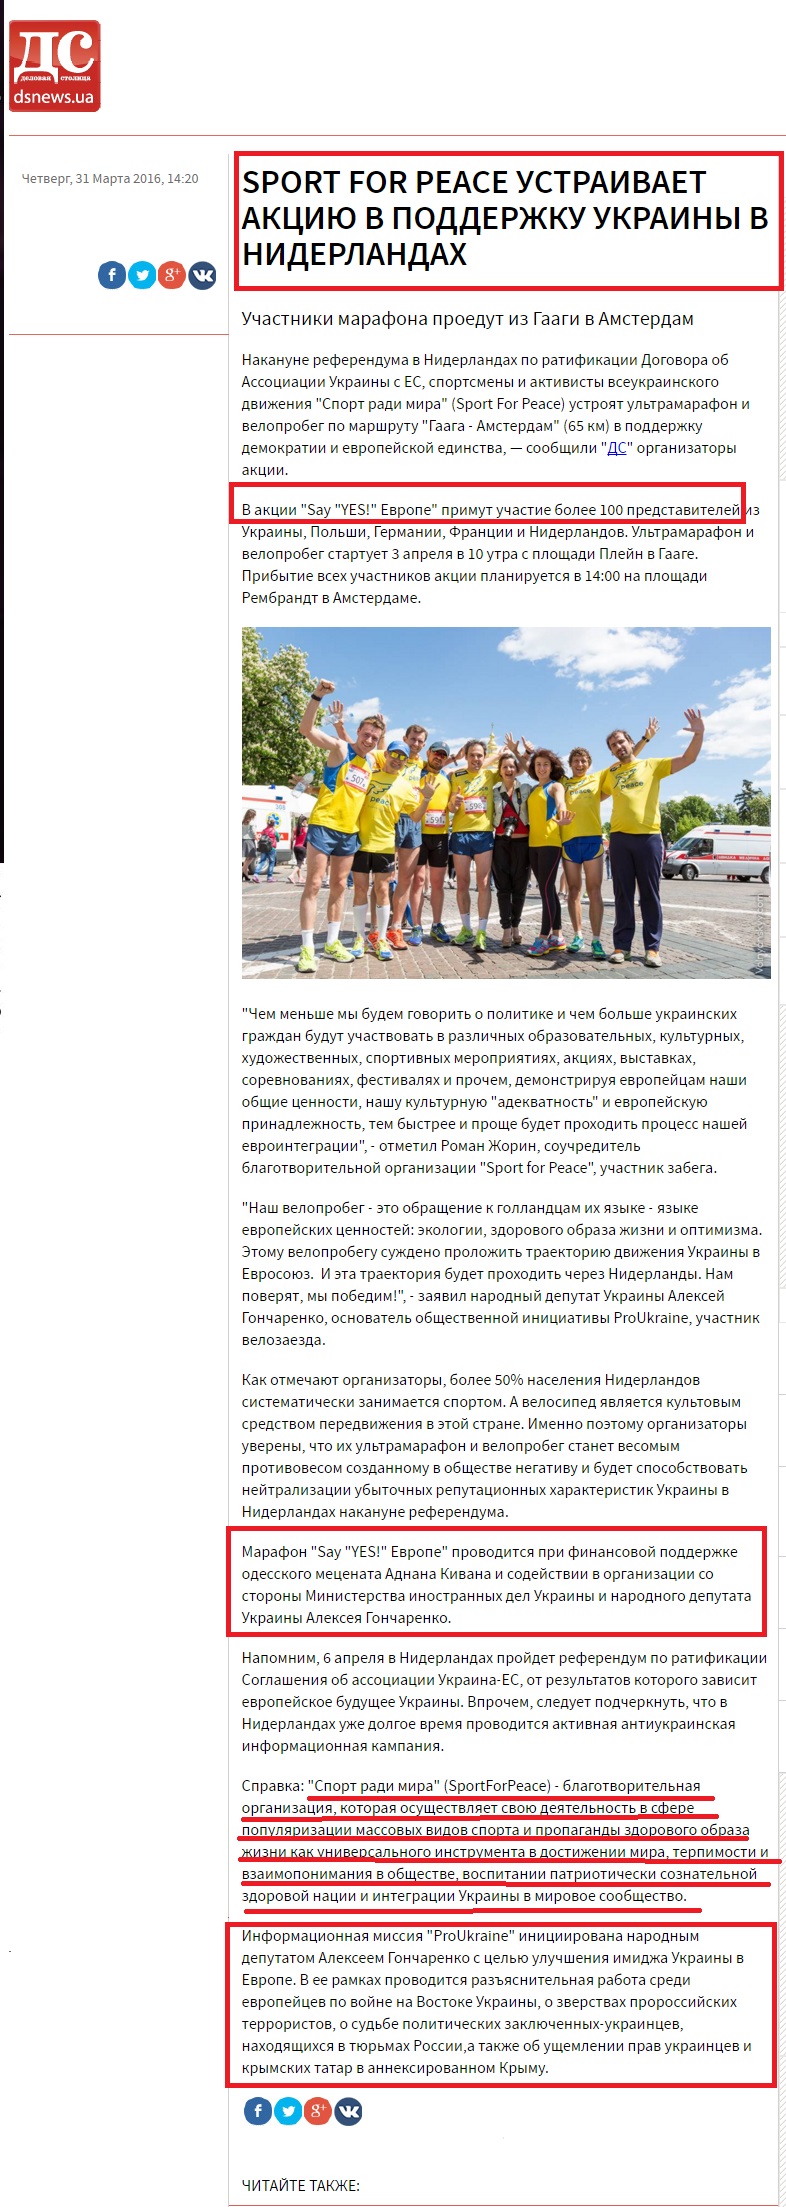 http://www.dsnews.ua/politics/sport-for-peace-ustraivaet-aktsii-v-podderzhku-ukrainy-v-niderlandah-31032016142000